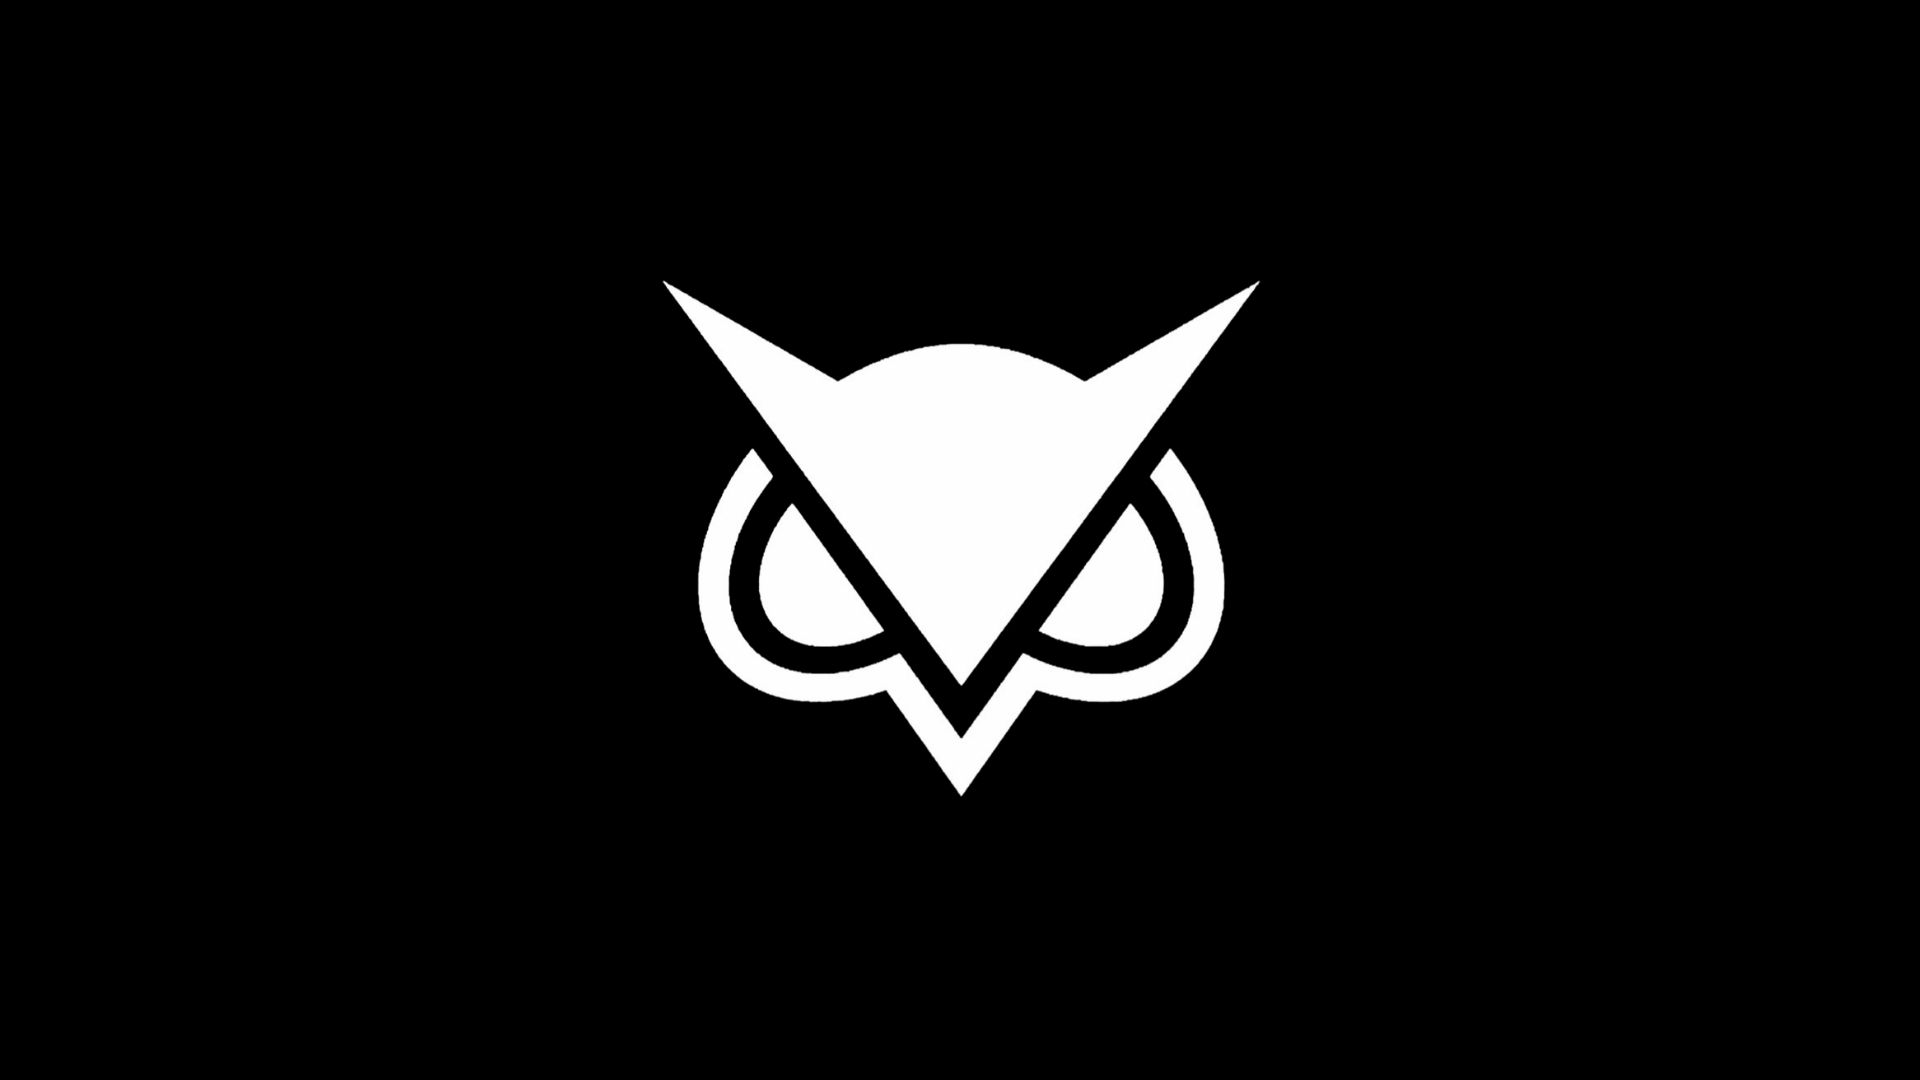 Vanoss Owl wallpaper HD